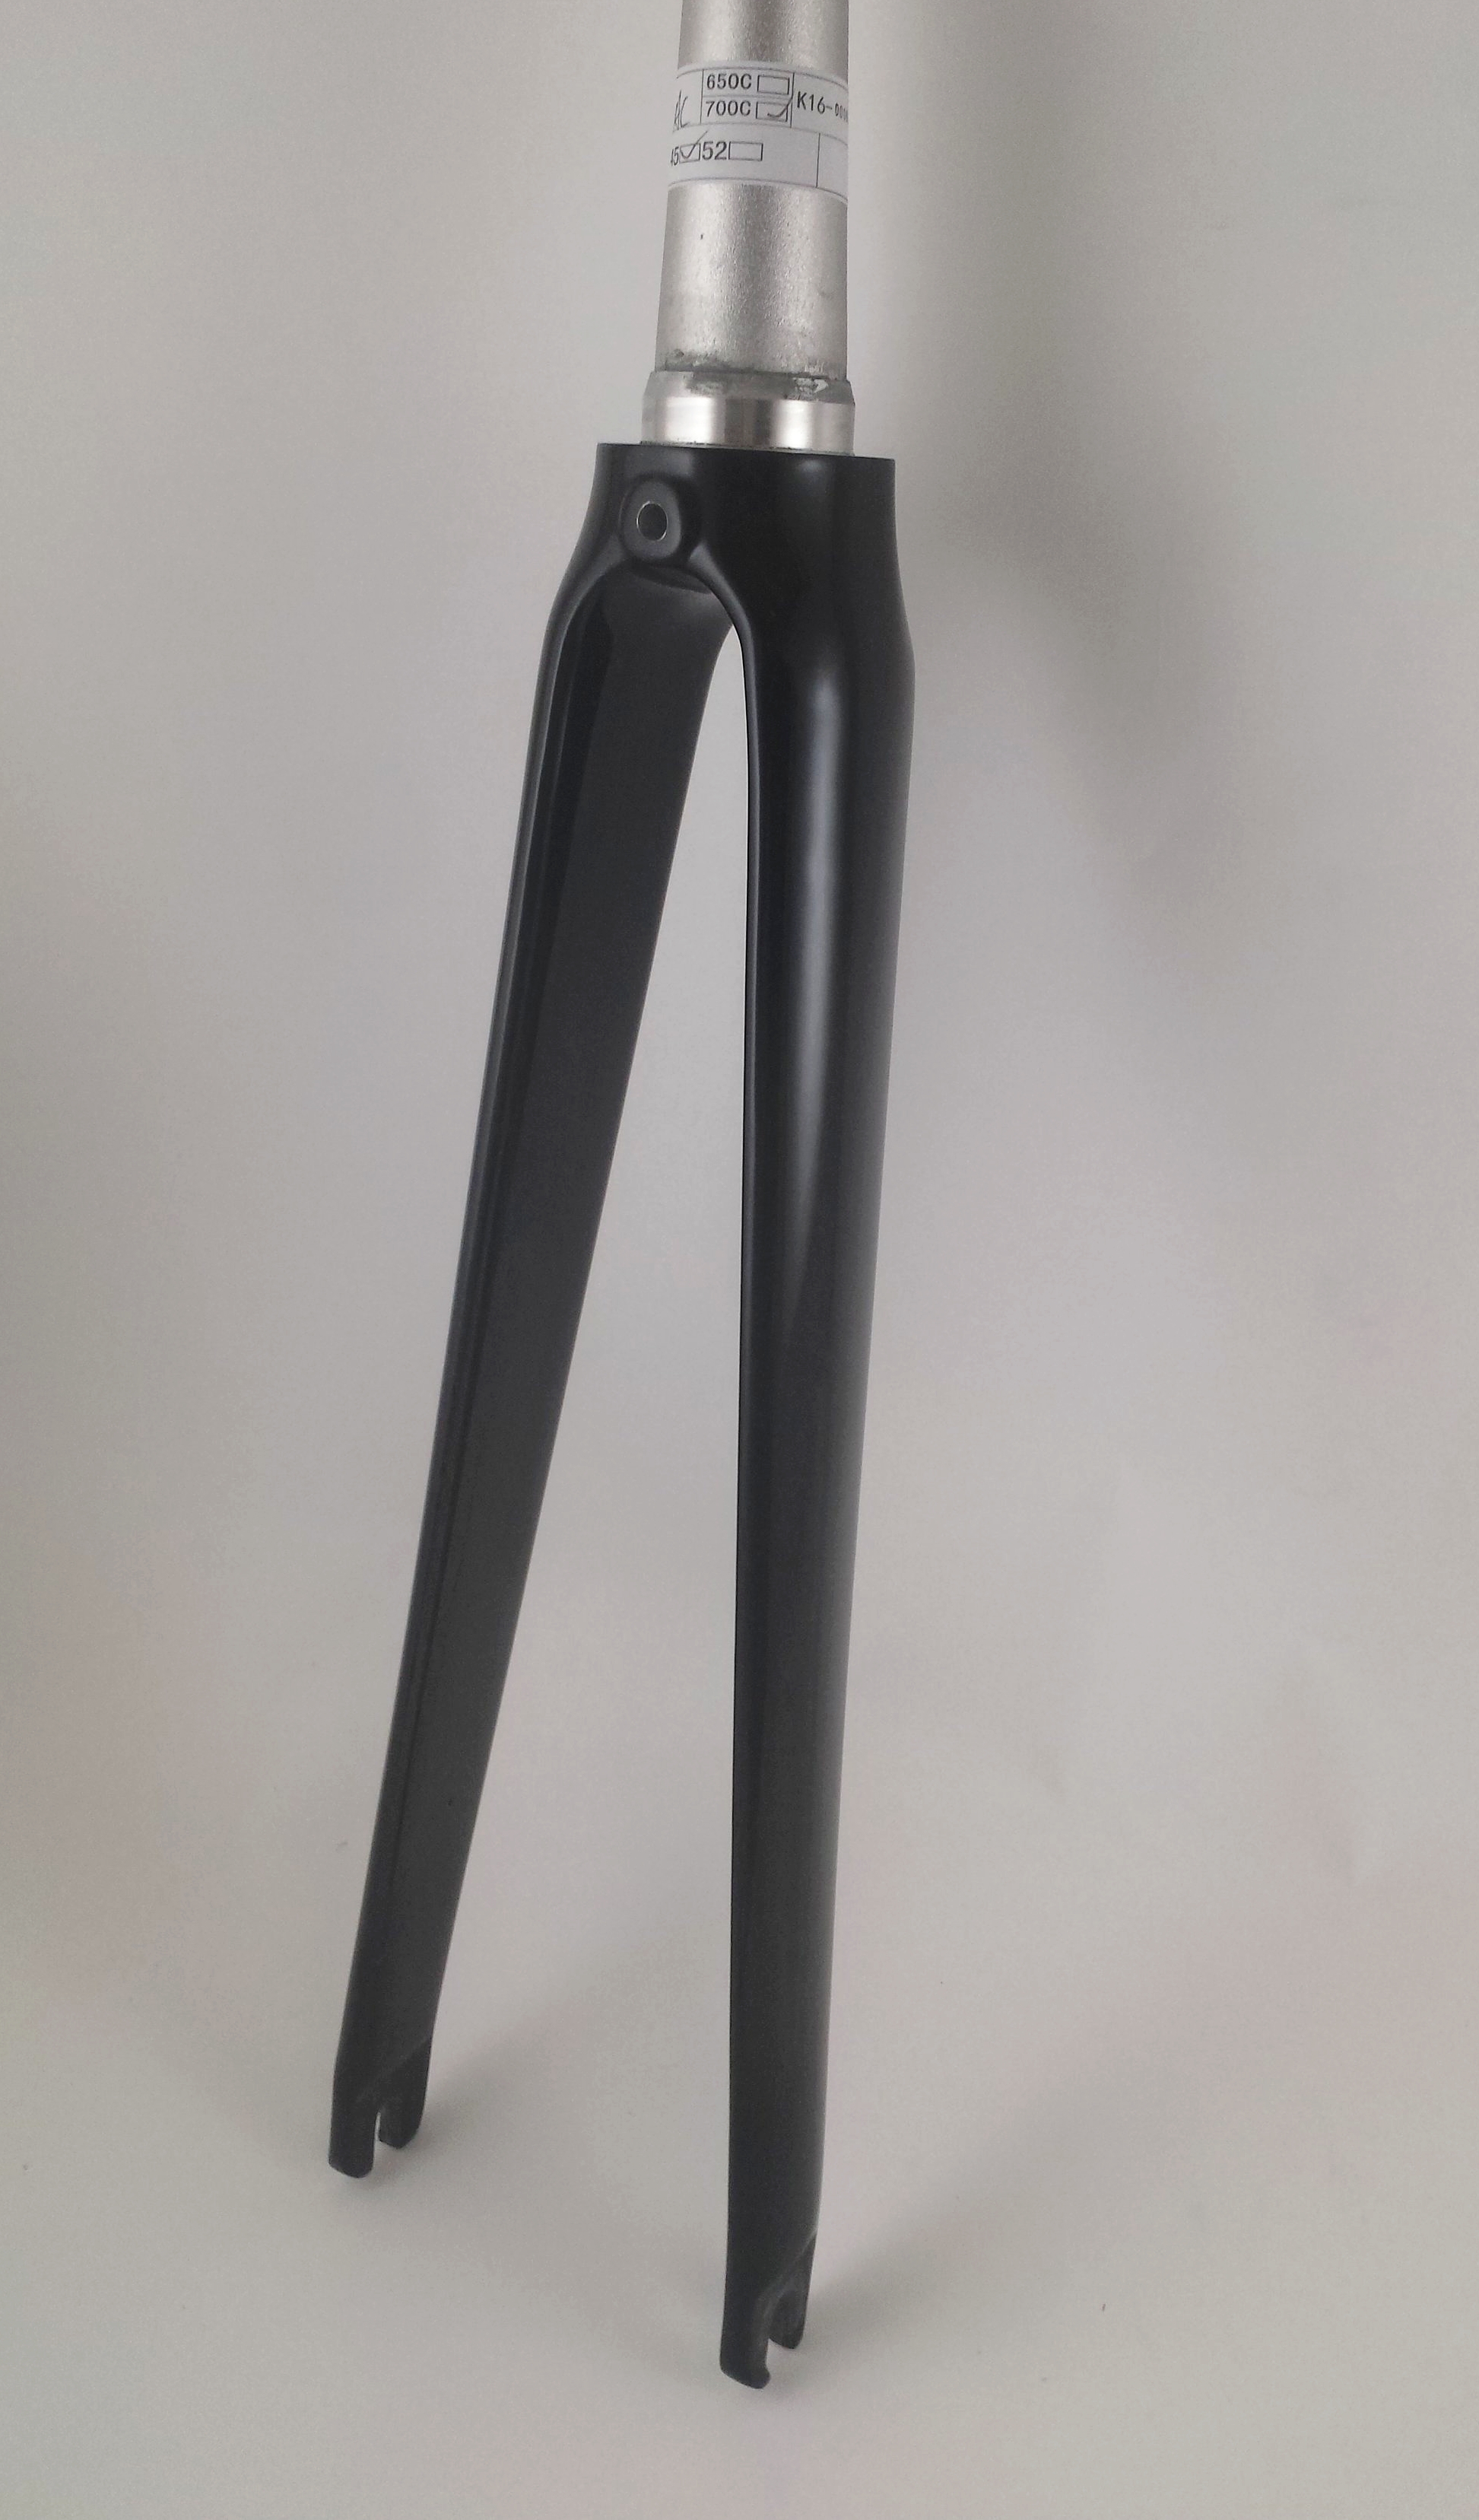 tapered carbon fork